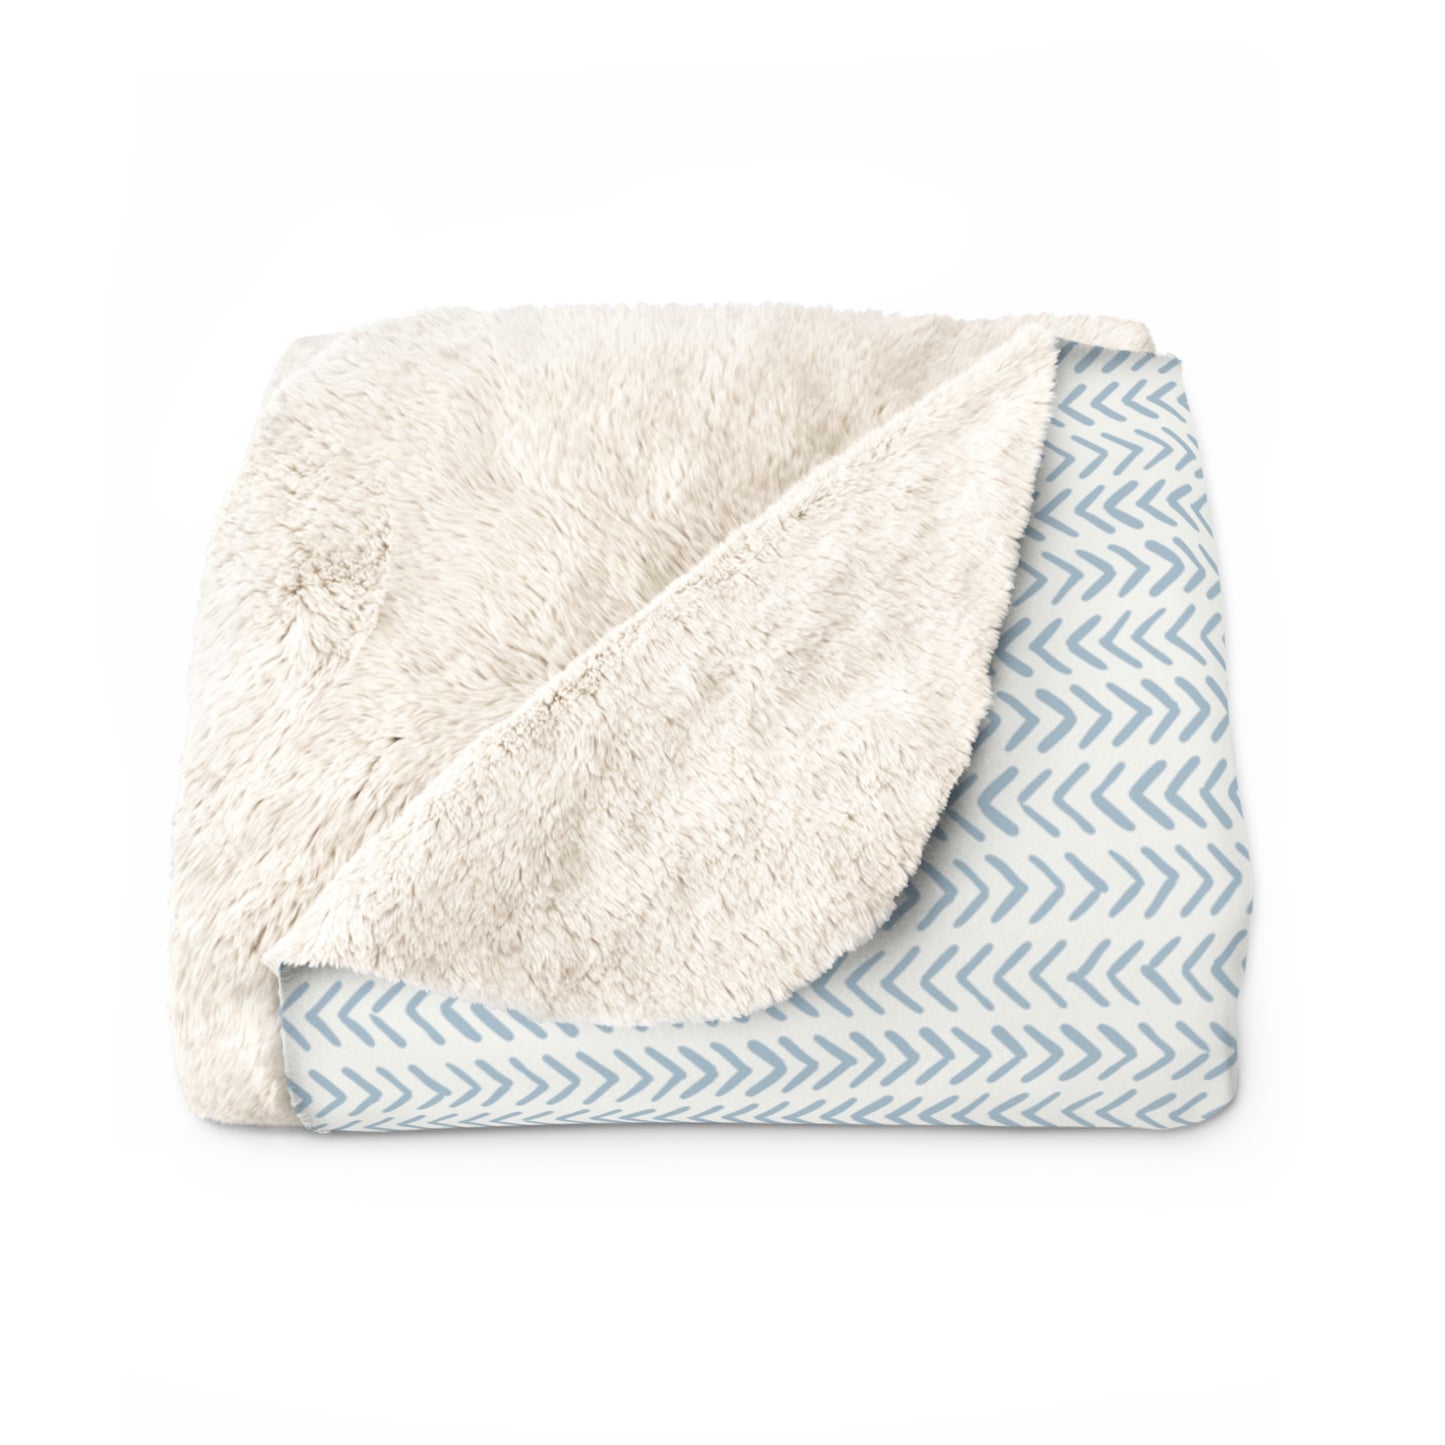 Beautiful, Cozy, Soft - Amazing - Family Rules - Vintage Sign - Boho Blue Stripes - Sherpa Fleece Blanket